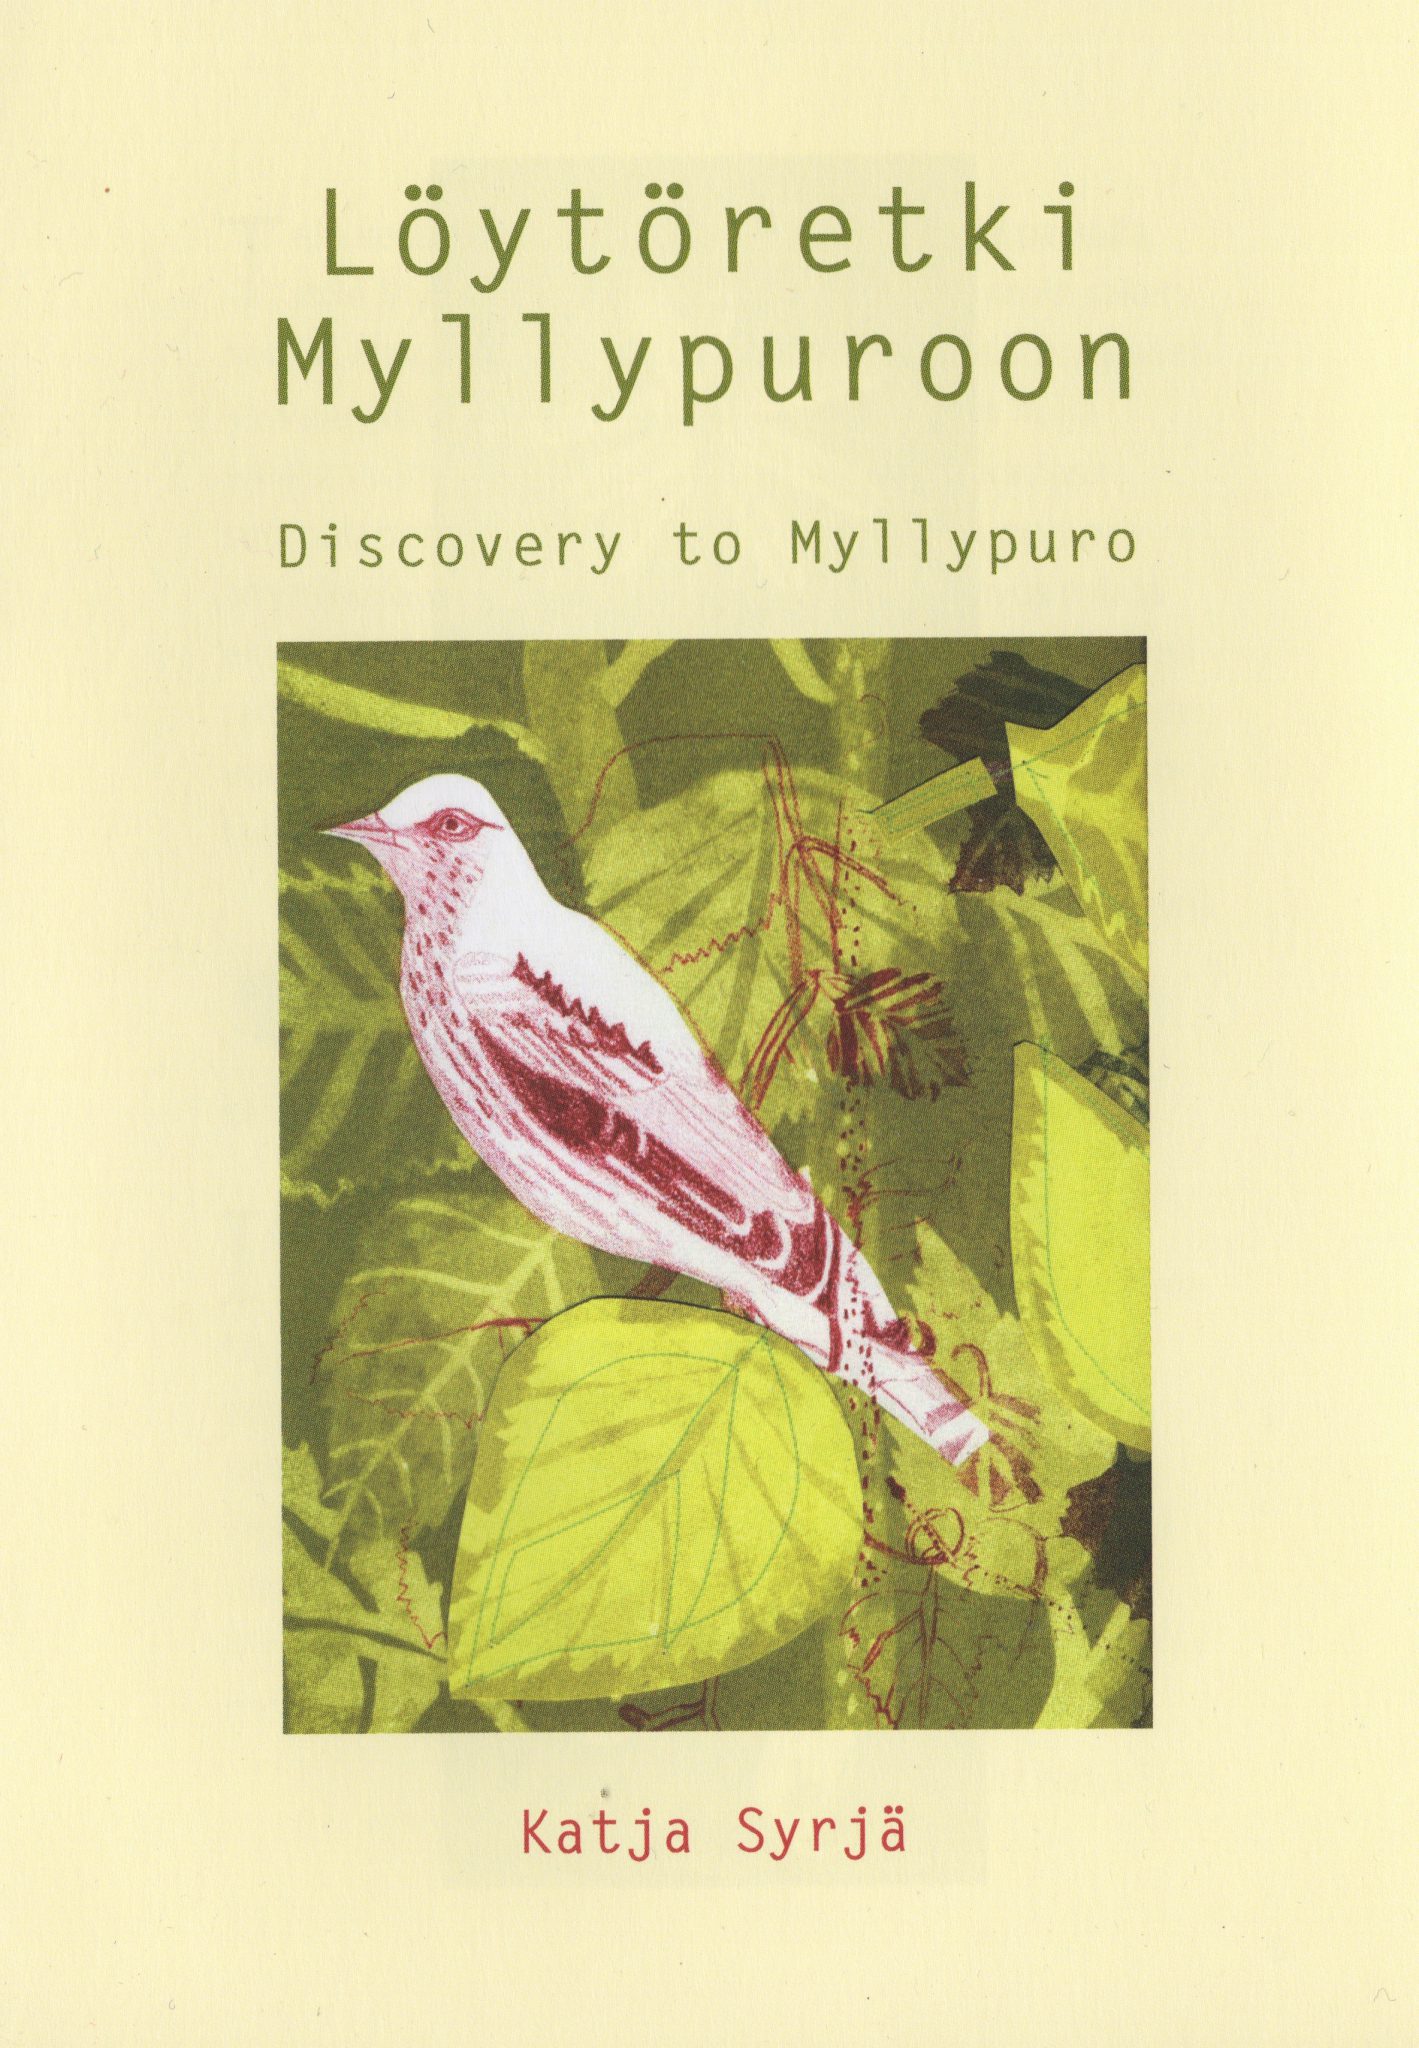 Myllypuro